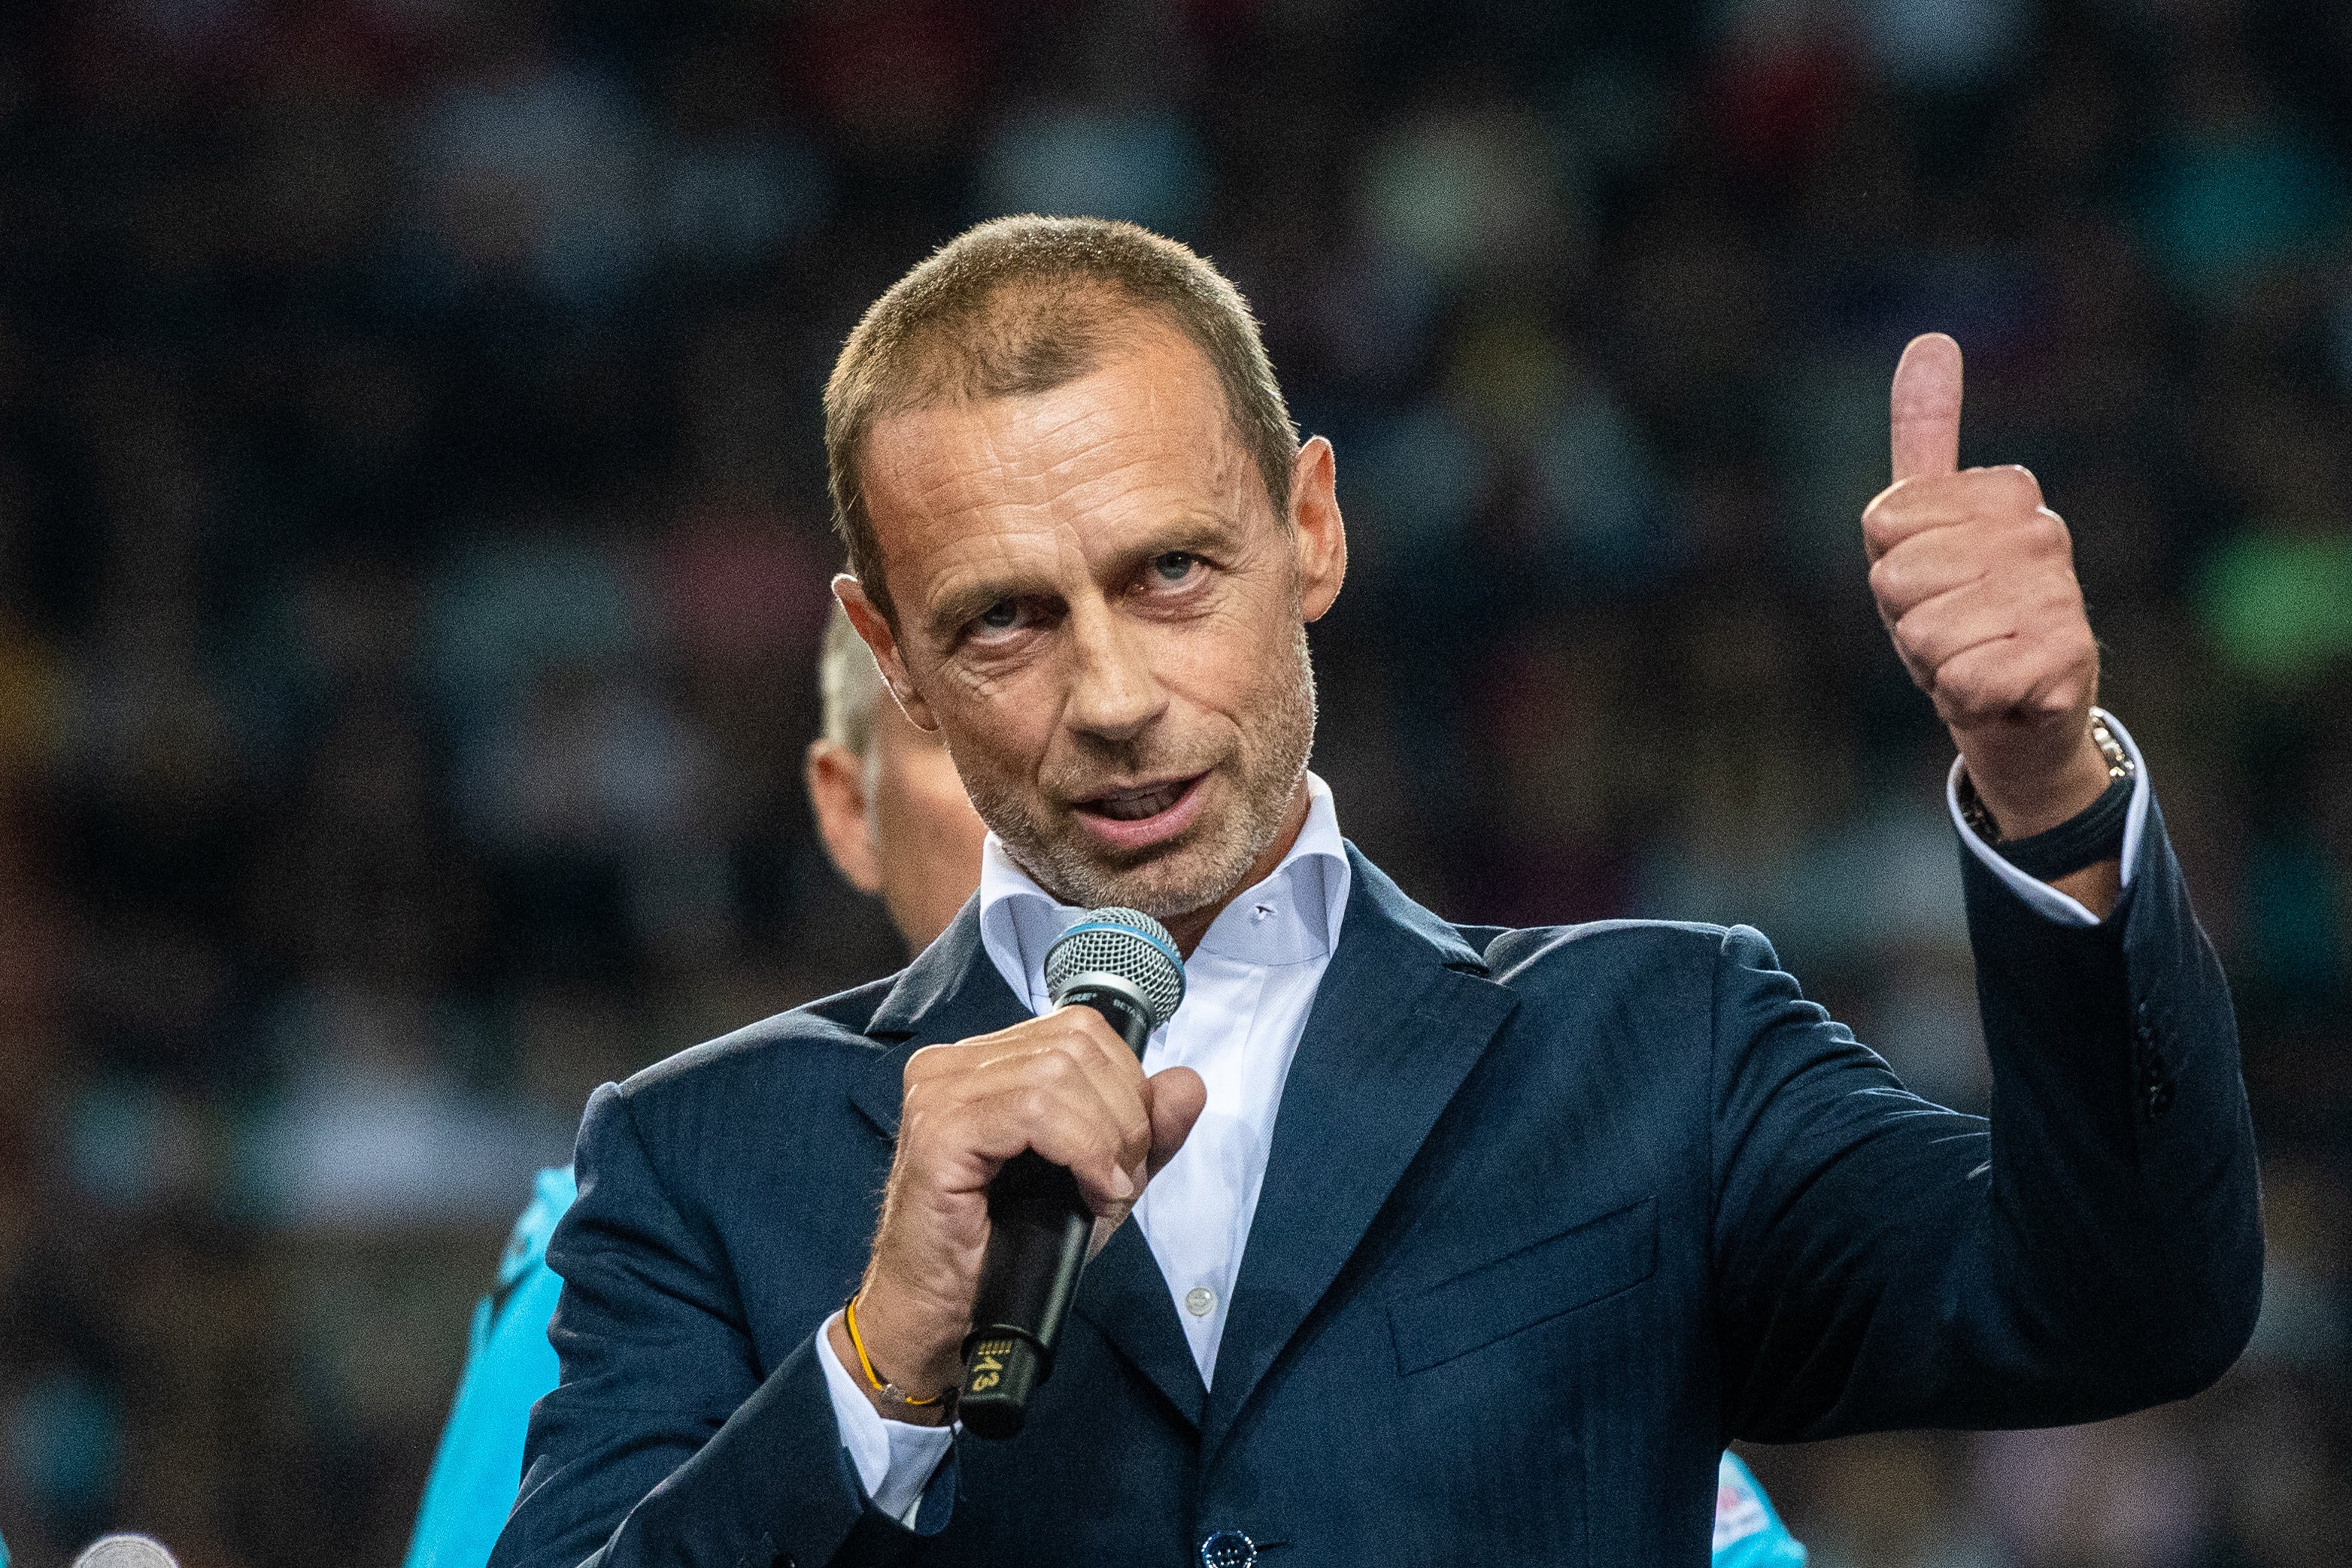 Uefa president Aleksander Ceferin has faced criticism from Pep Guardiola